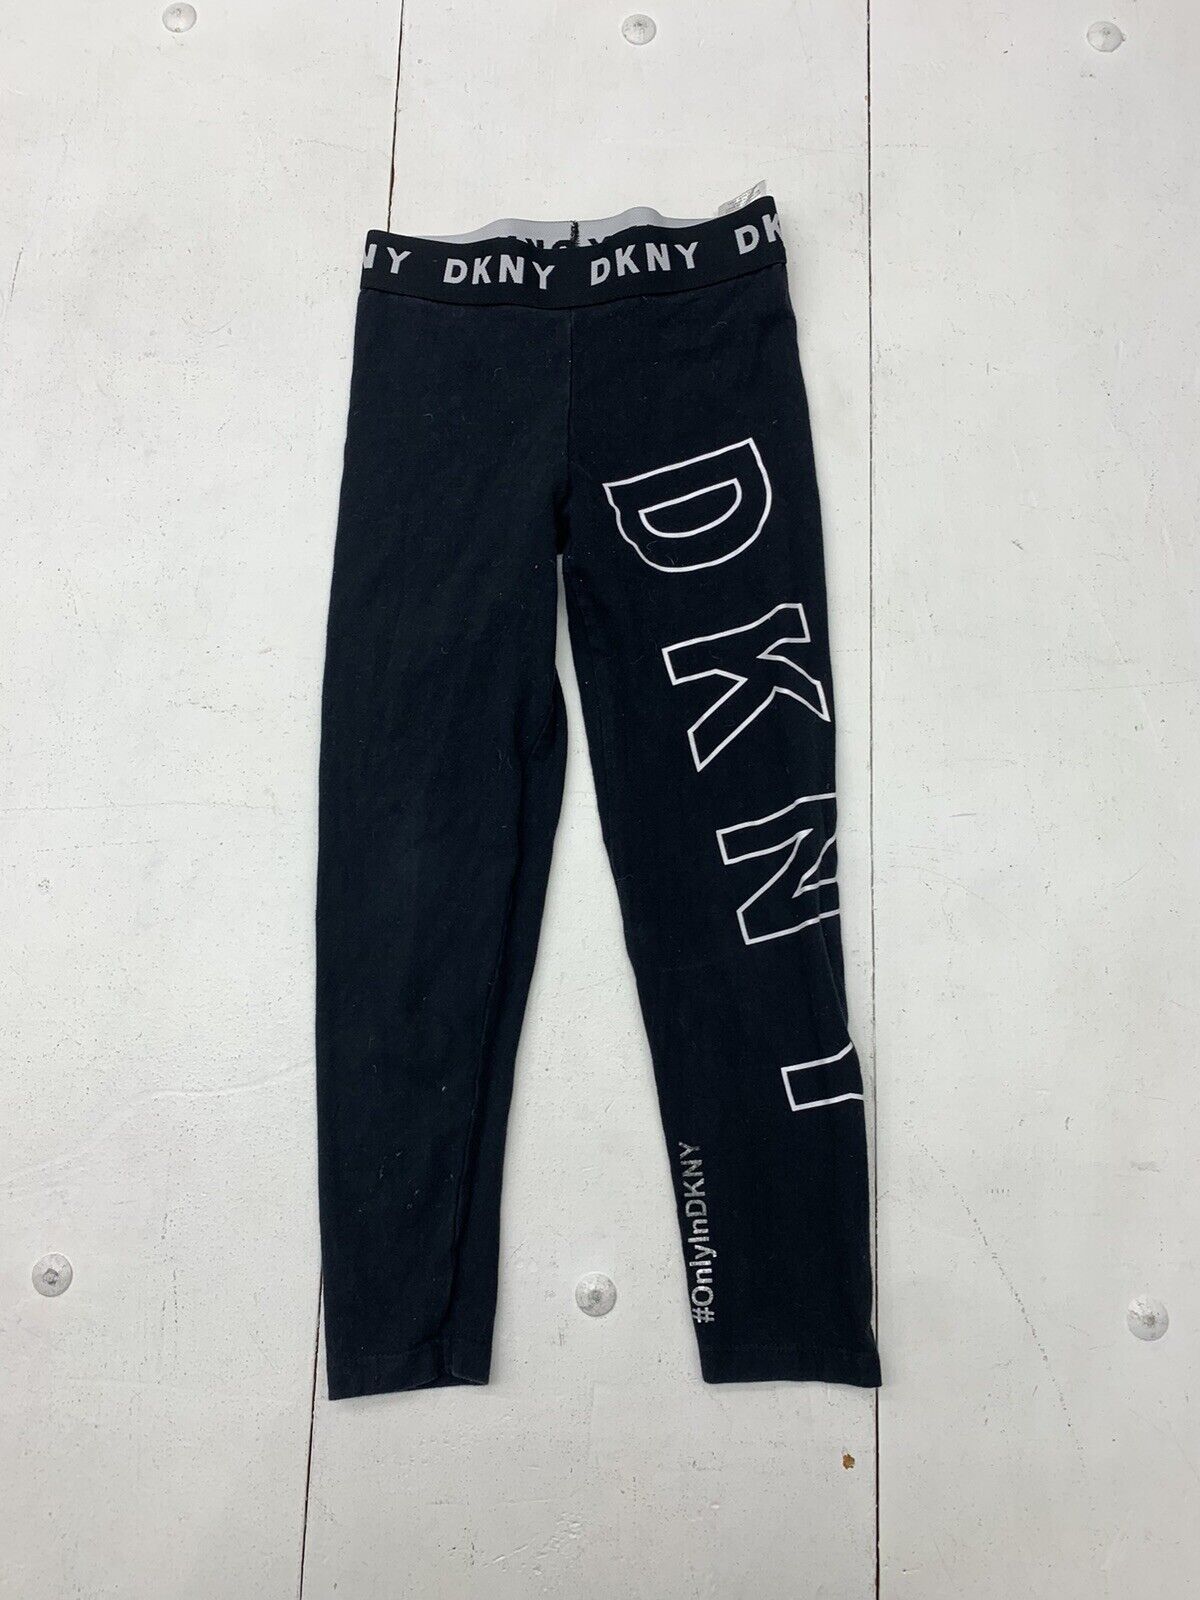 DKNY Sport Black Logo 7/8 Leggings Women's Size Medium - beyond exchange